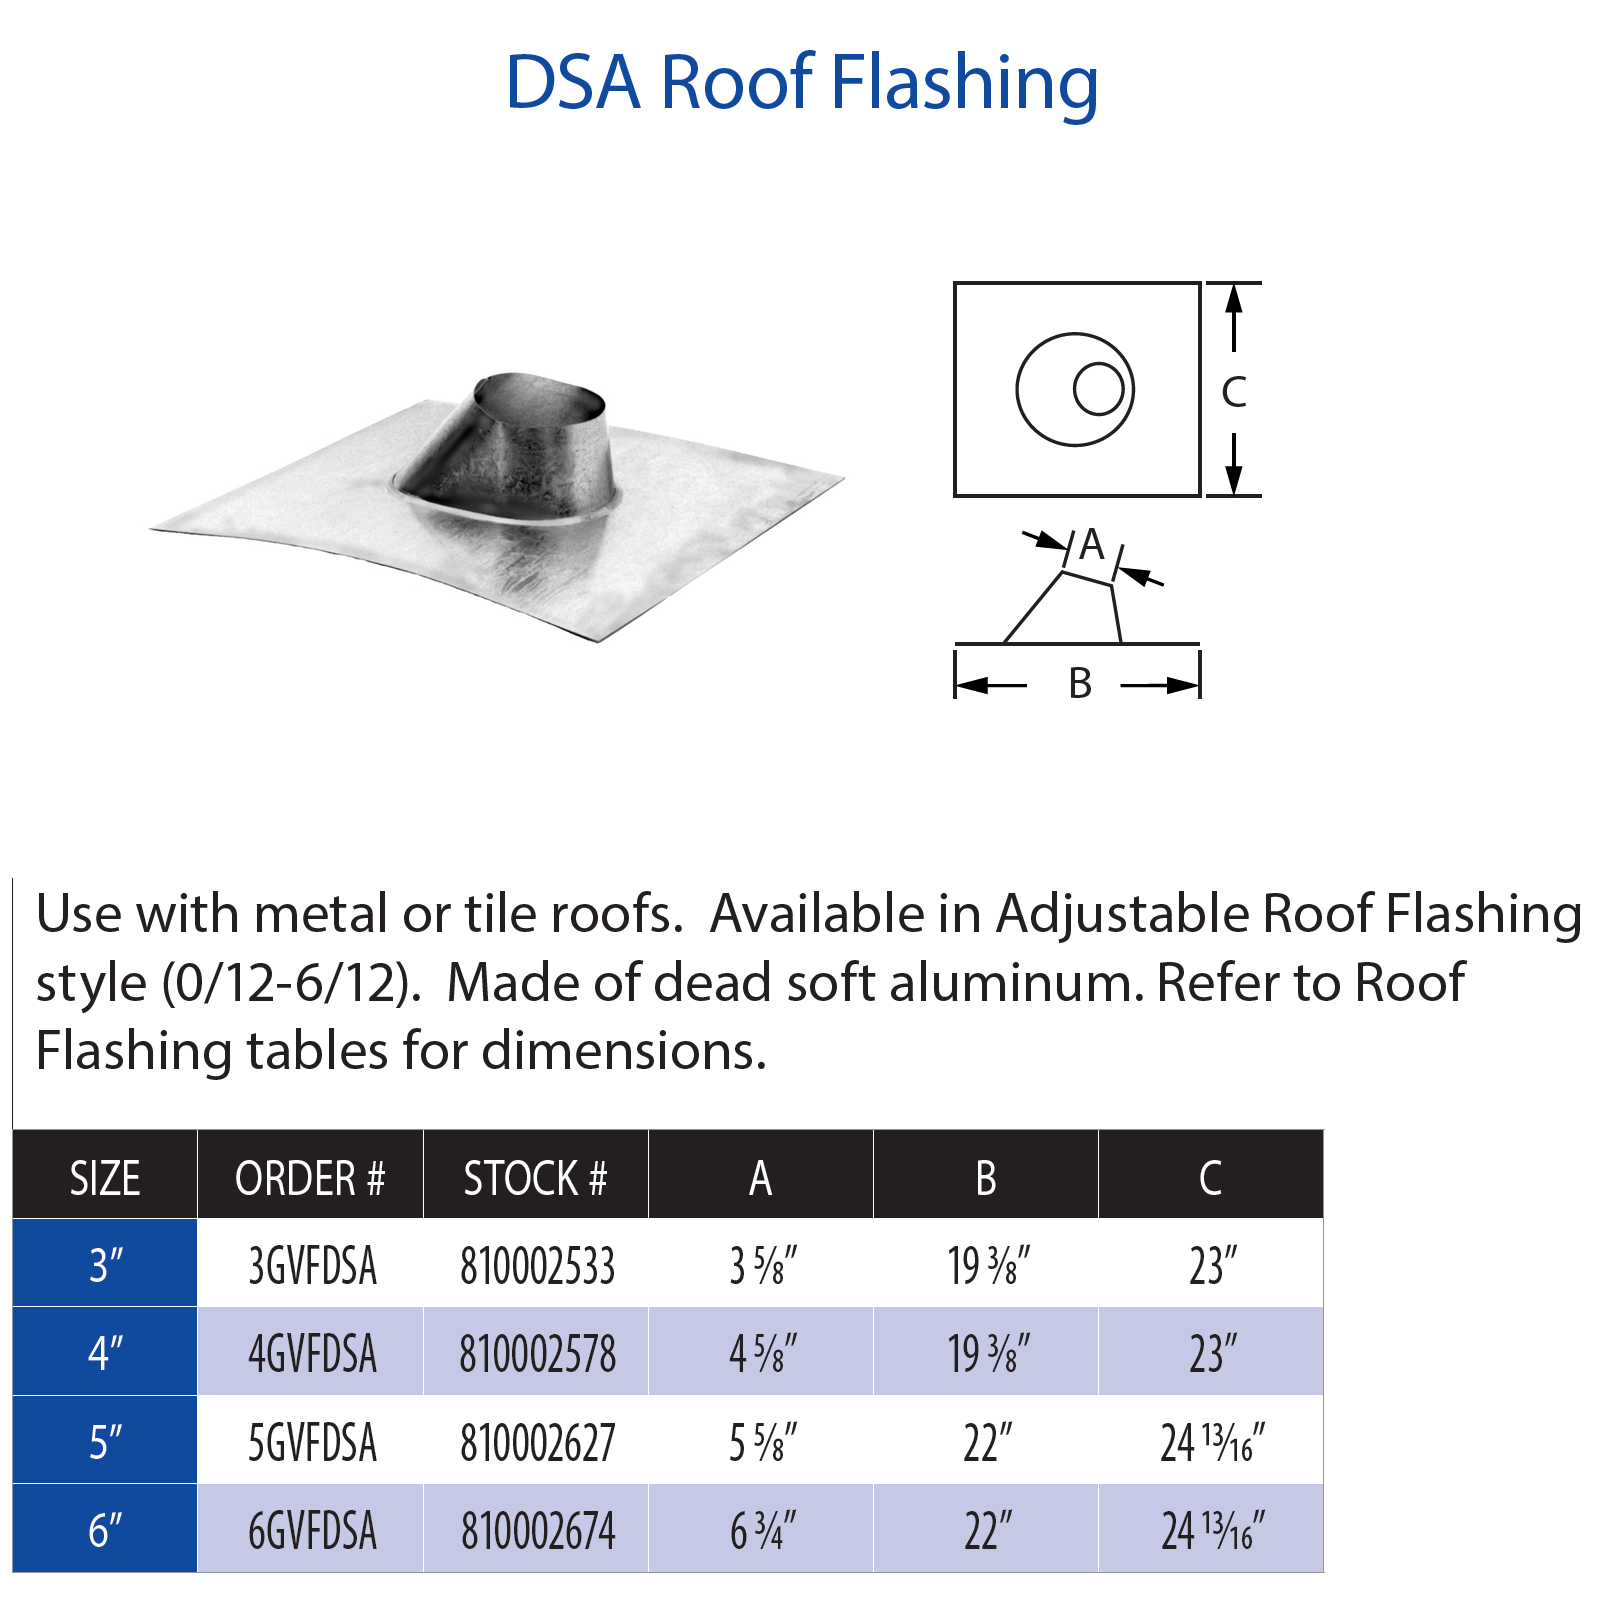 DuraVent Type B 4" DSA Roof Flashing | 4GVFDSA